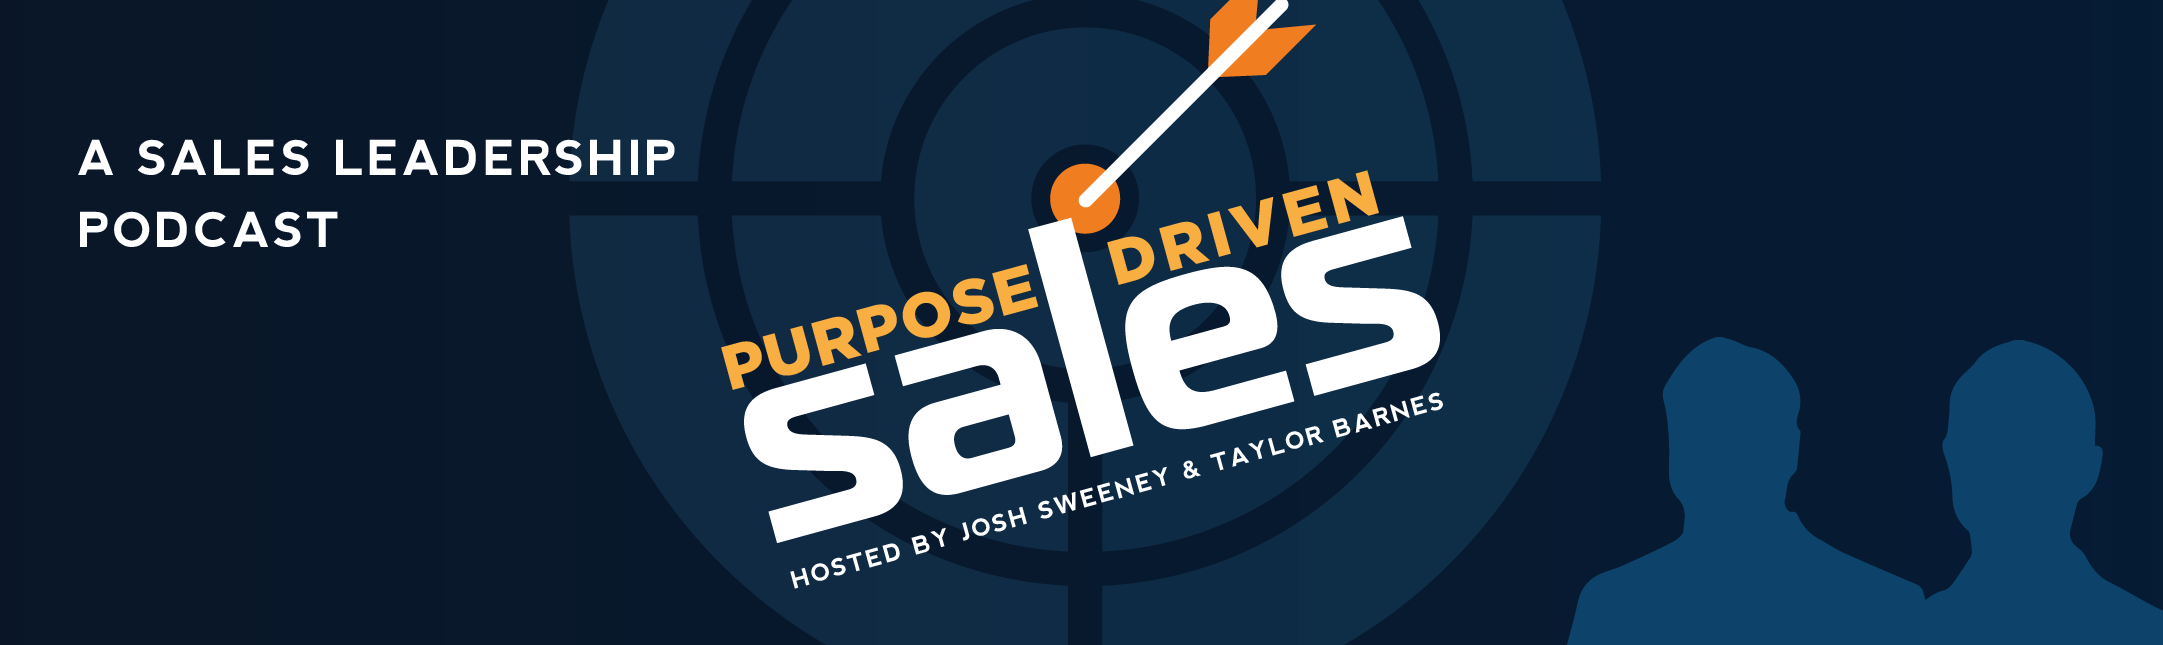 purpose driven sales b2b podcast